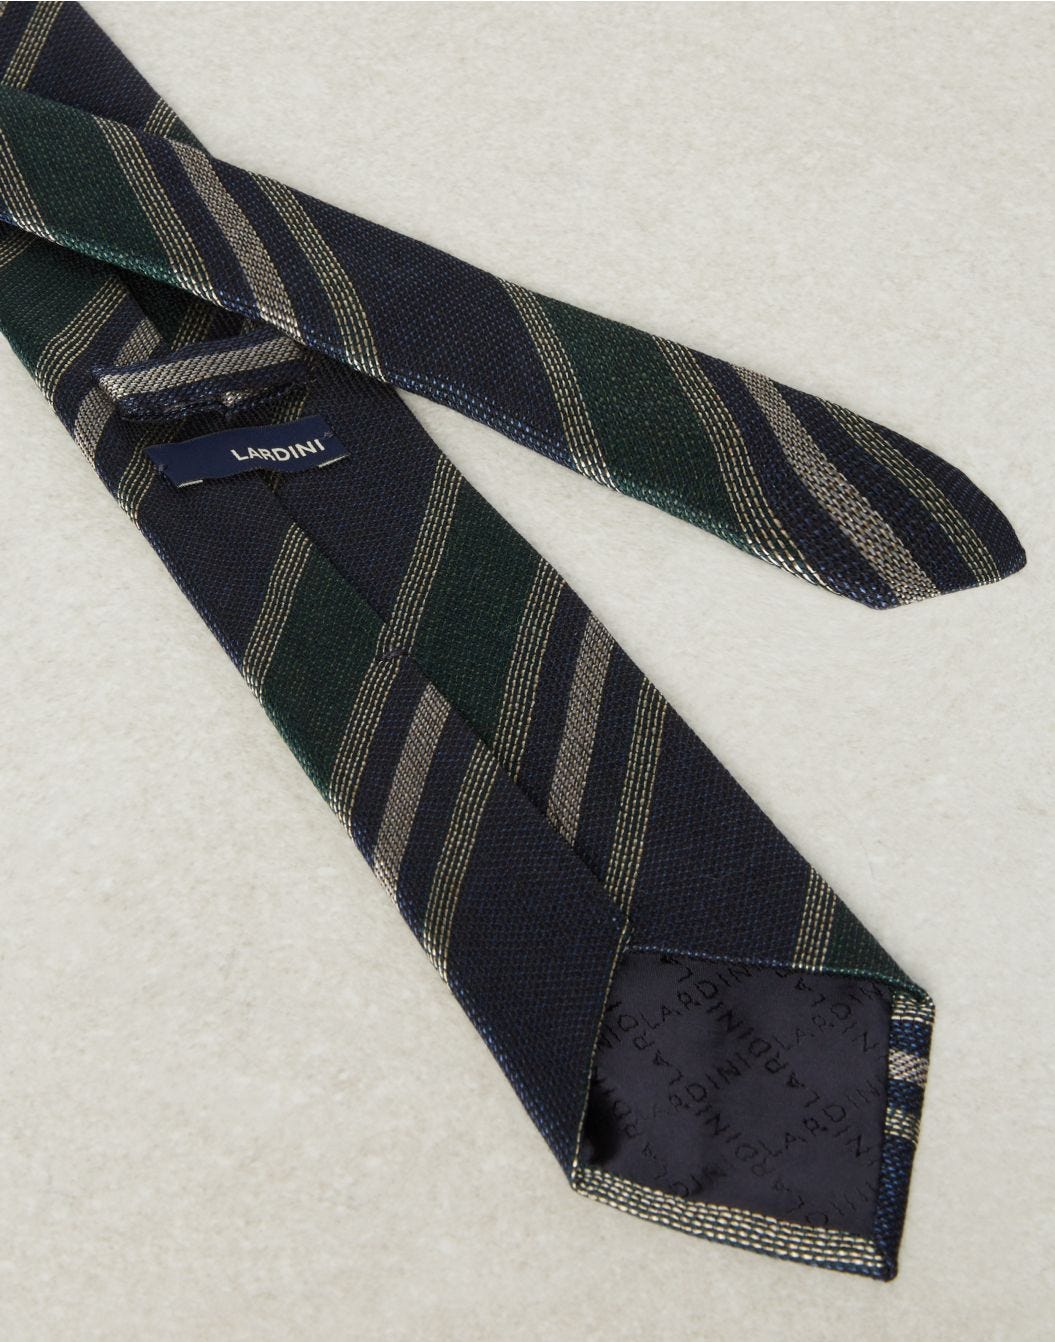 Regimental tie in a blue, green and beige colourway